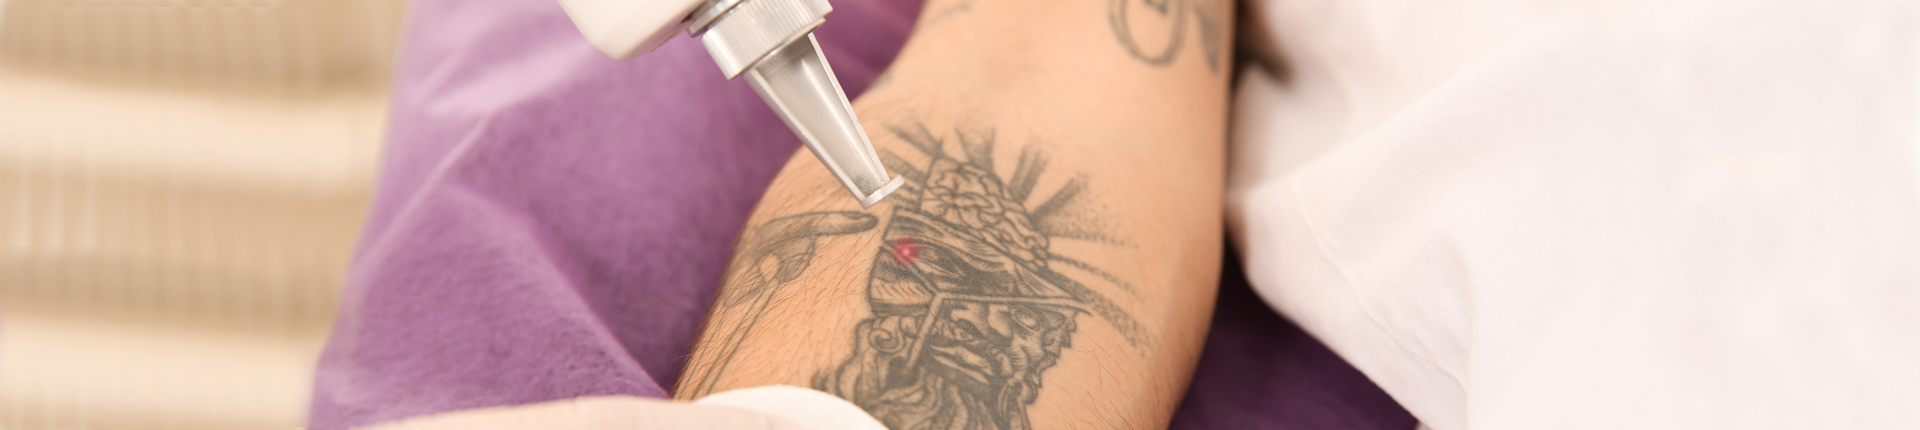 Best Laser Tattoo Removal Treatments Near Me In Richmond VA Area